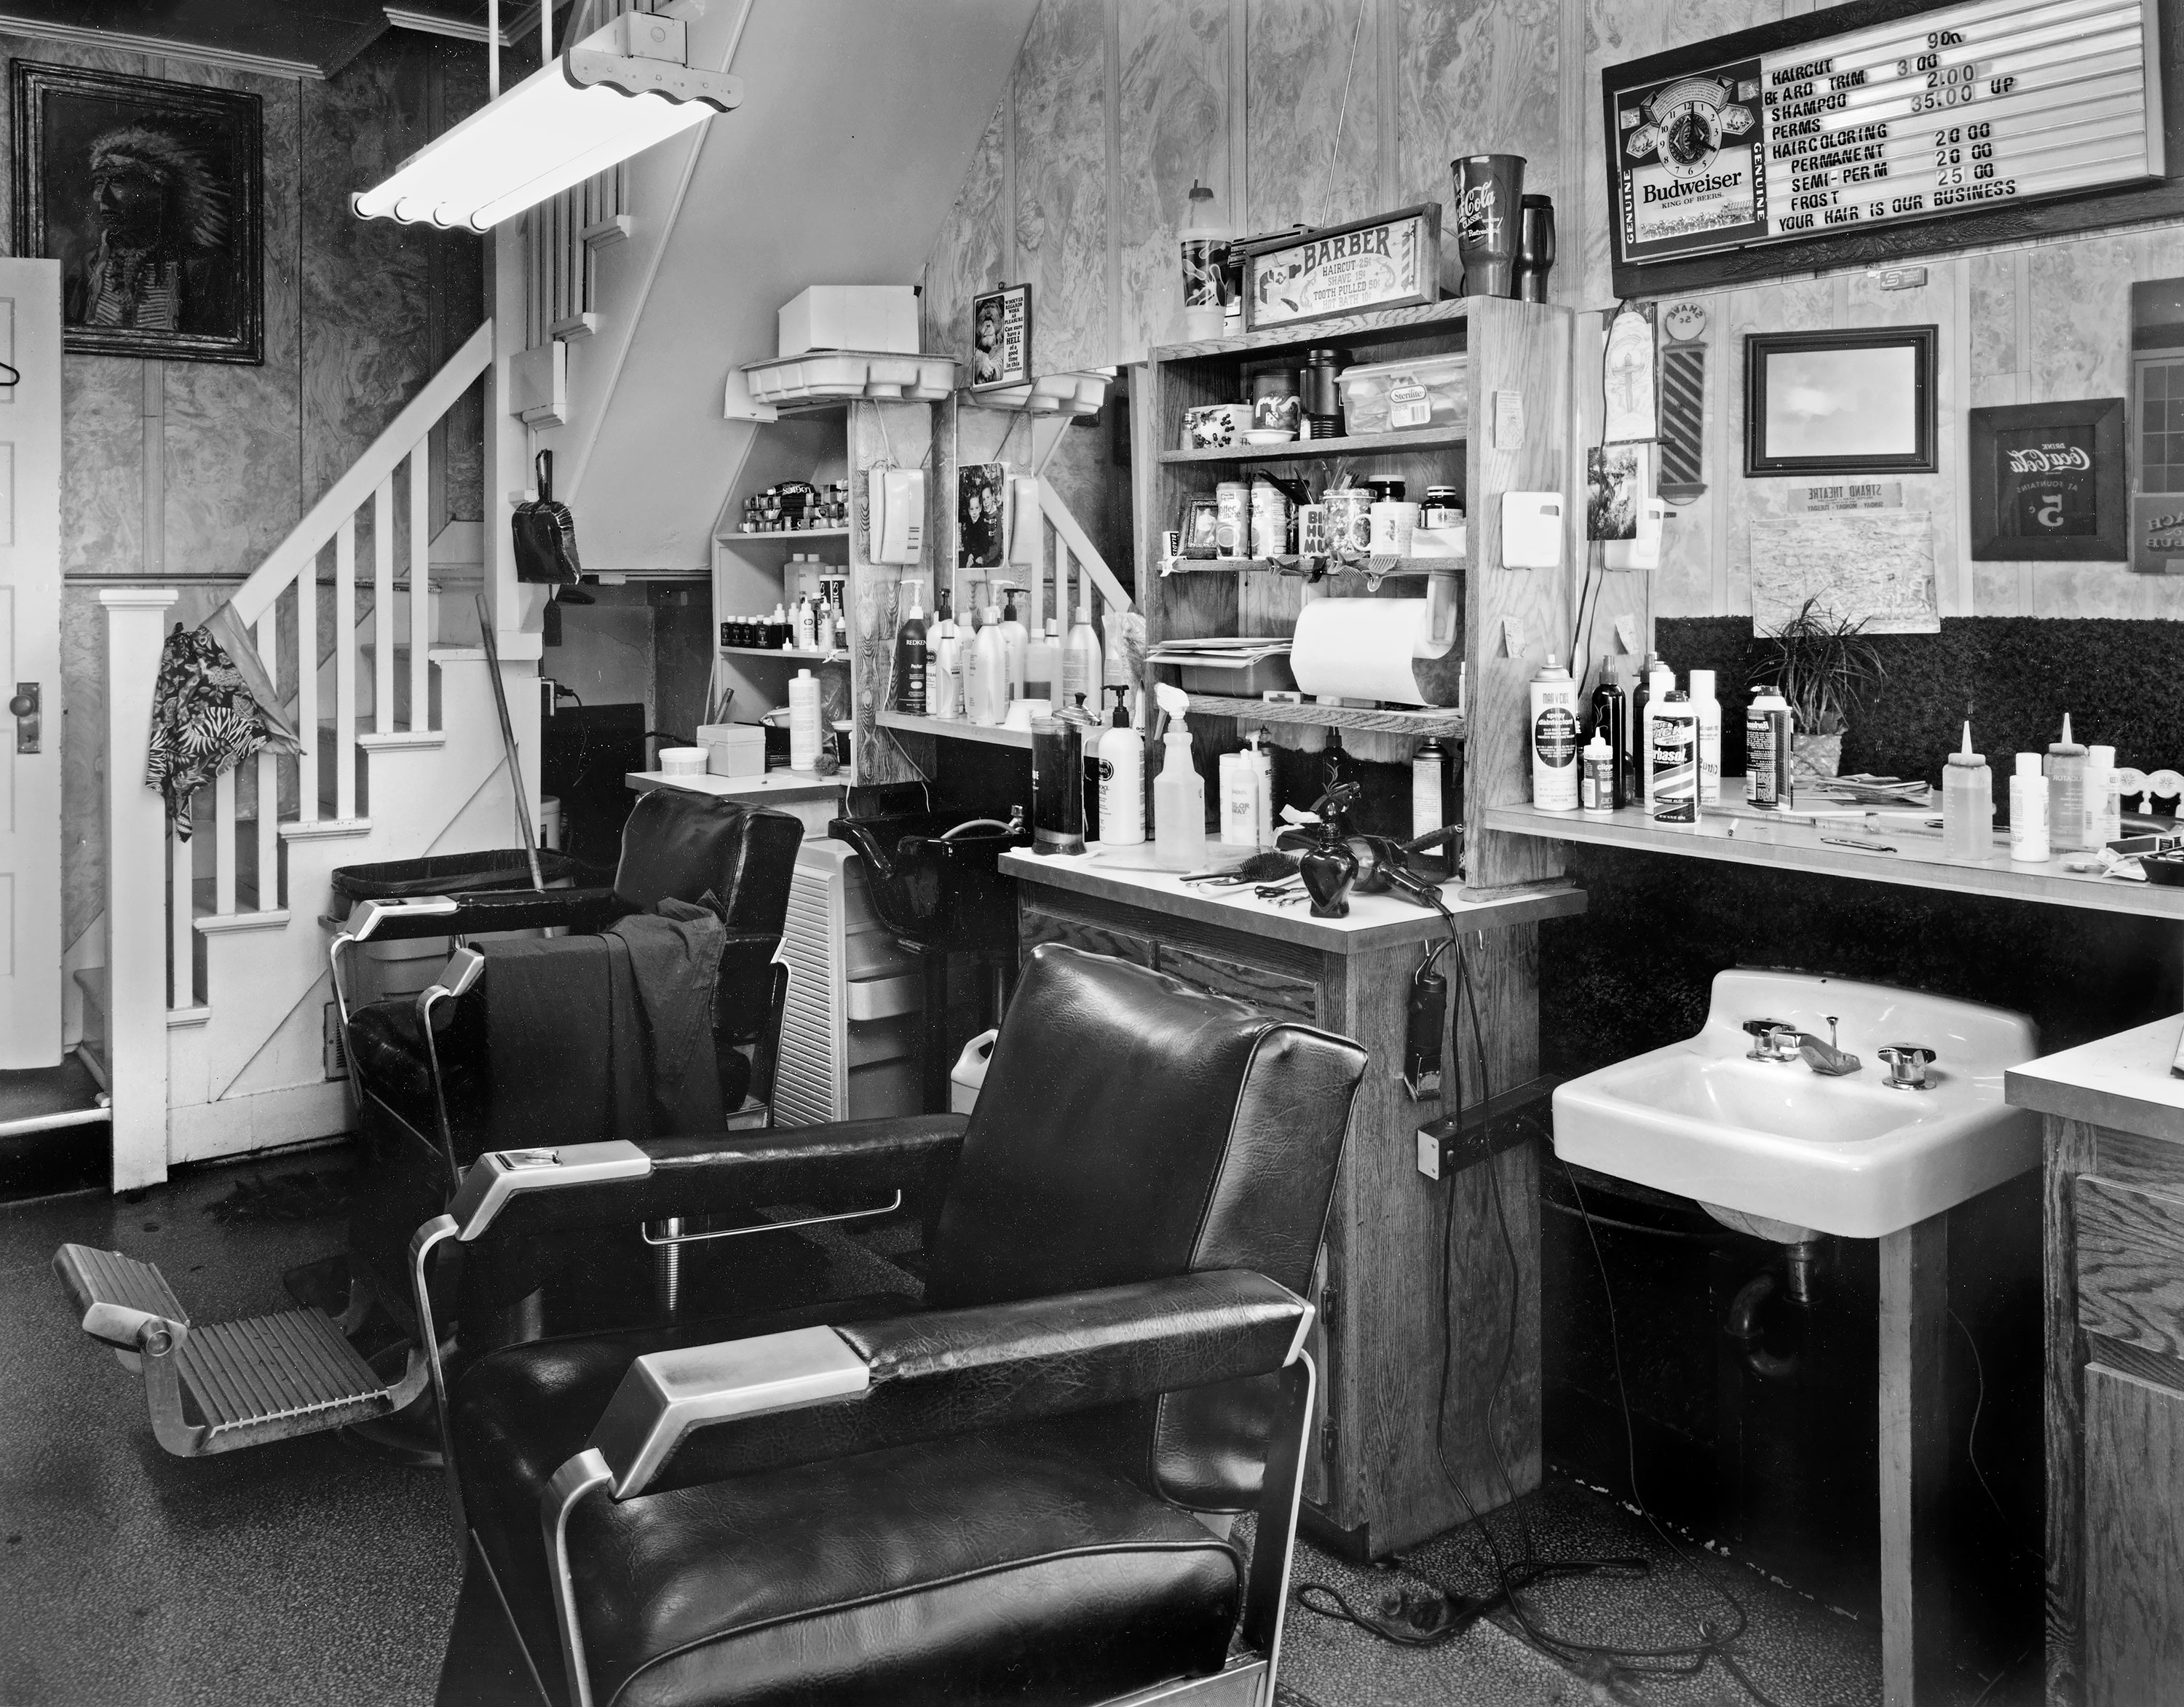 Barber shop - Helper, Utah. © 2020 Alan Blakely.  All Rights Reserved.